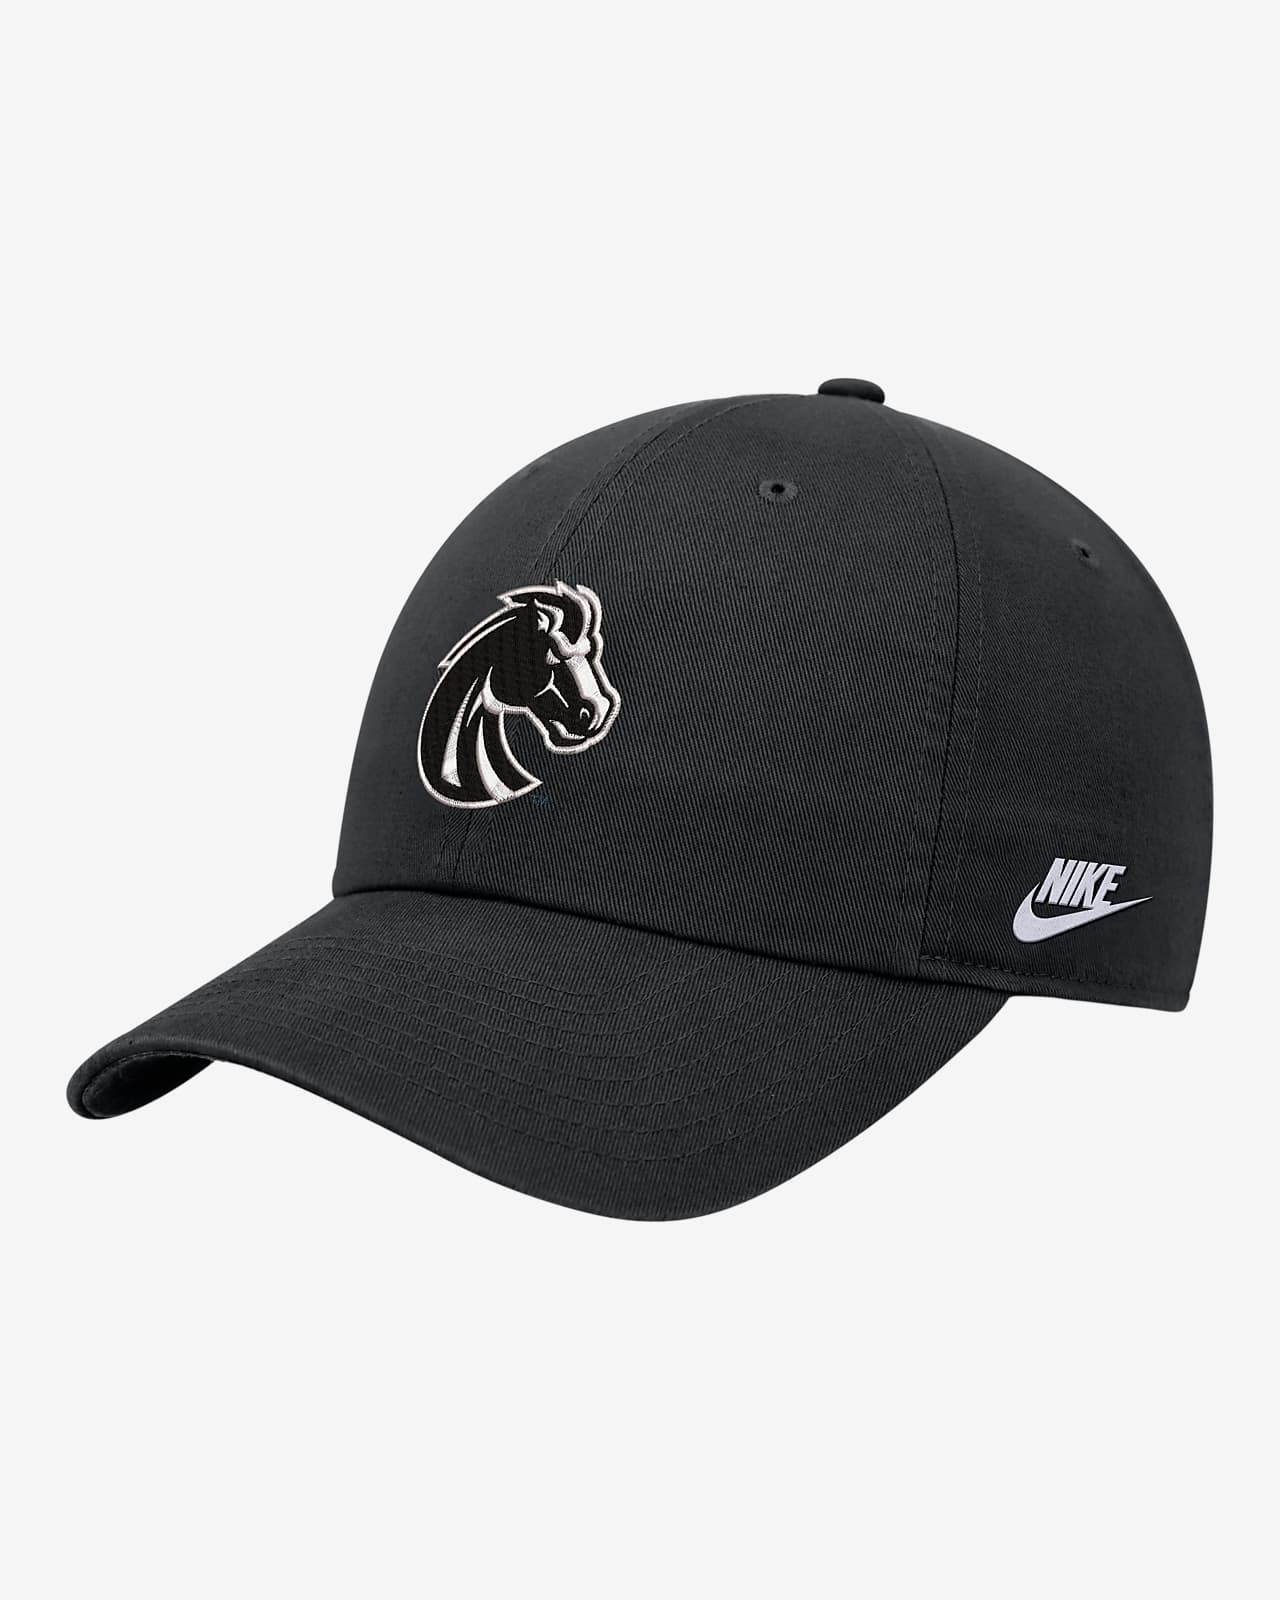 Boise State Nike College Cap